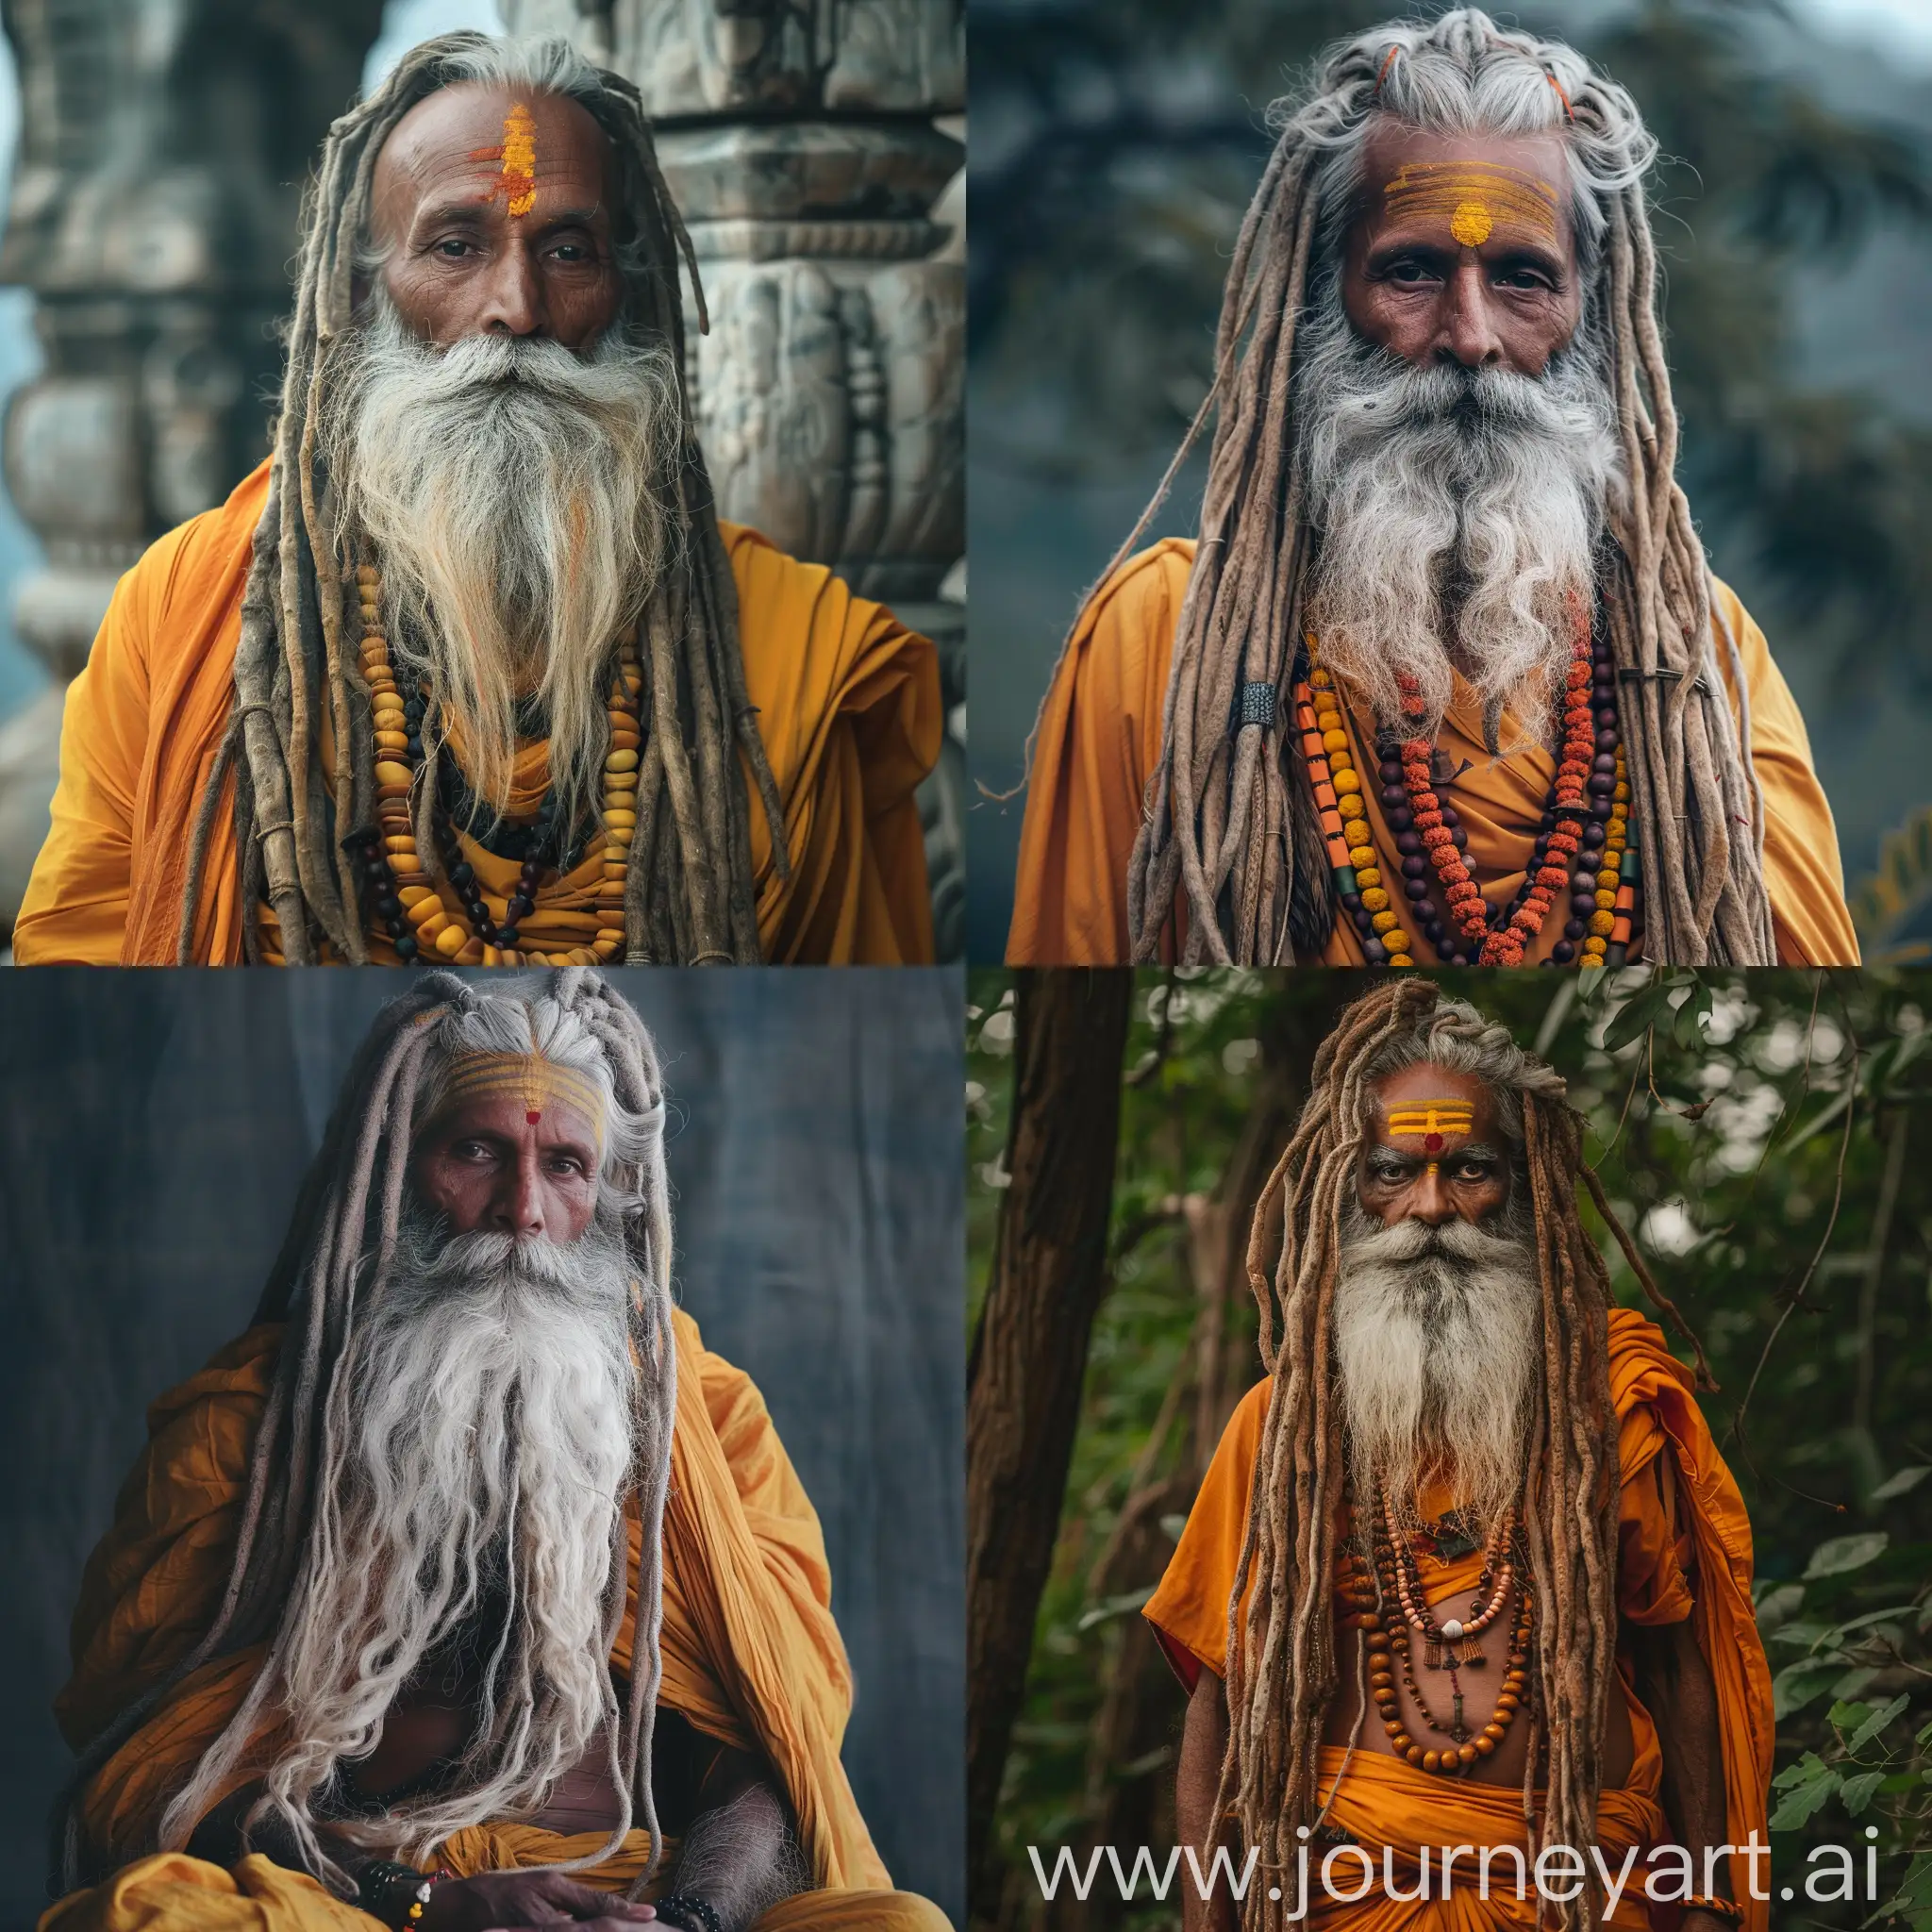 Shaiva-Monk-with-Long-Dreadlocks-and-Saffron-Attire